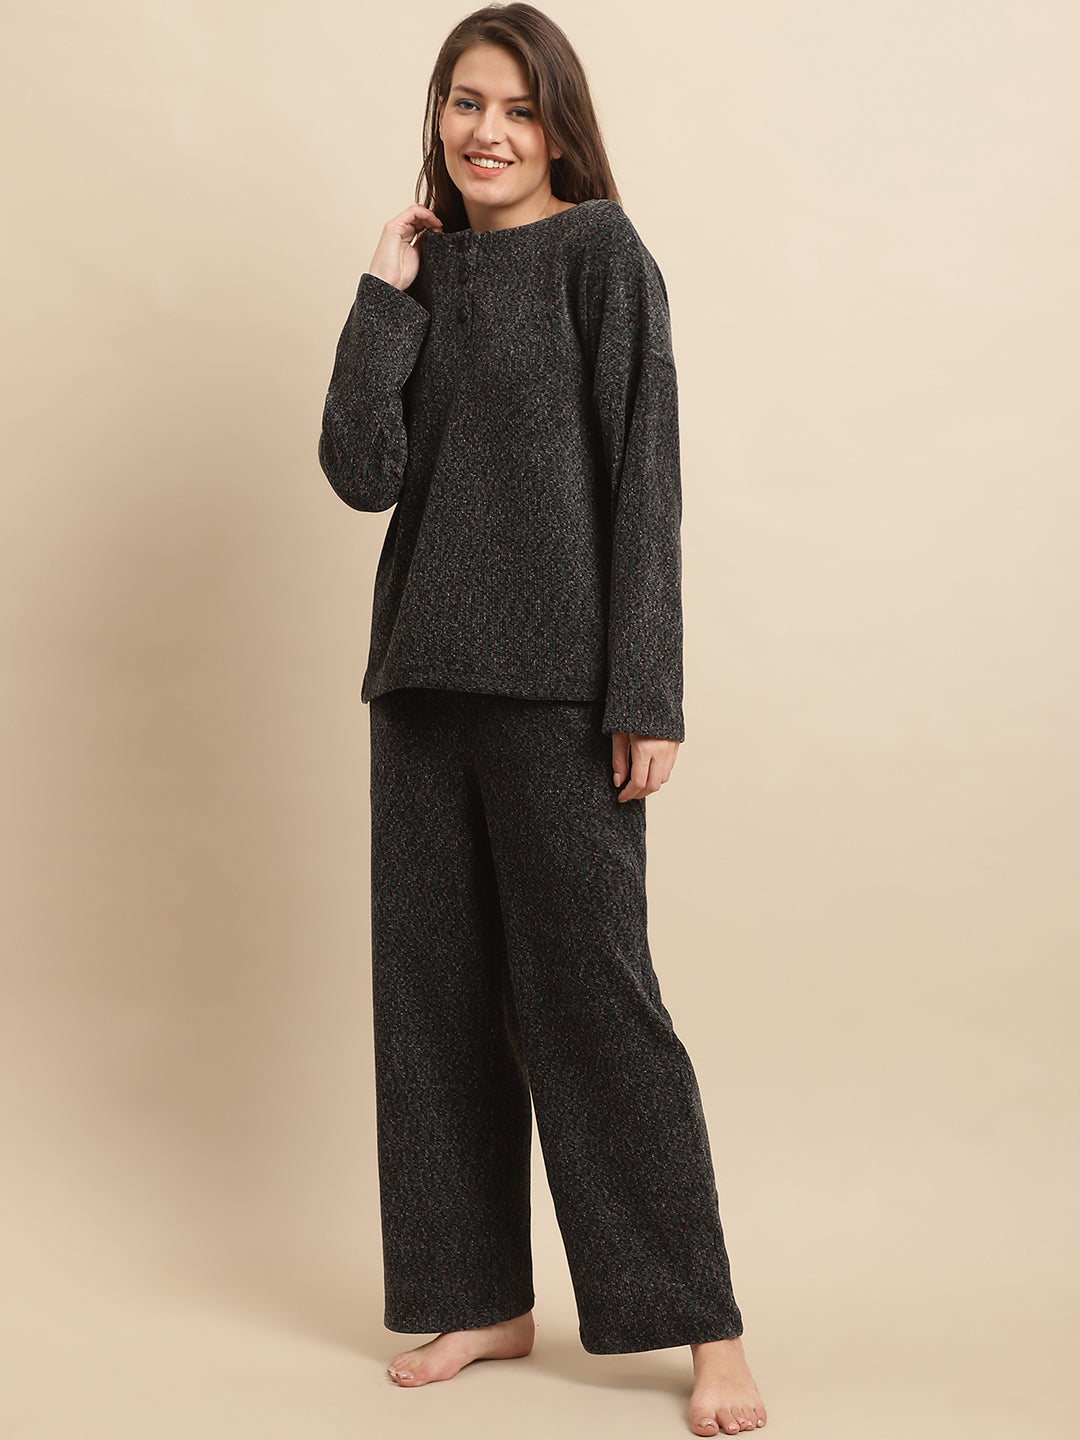 Soft - Winterwear - MJKAW23524C